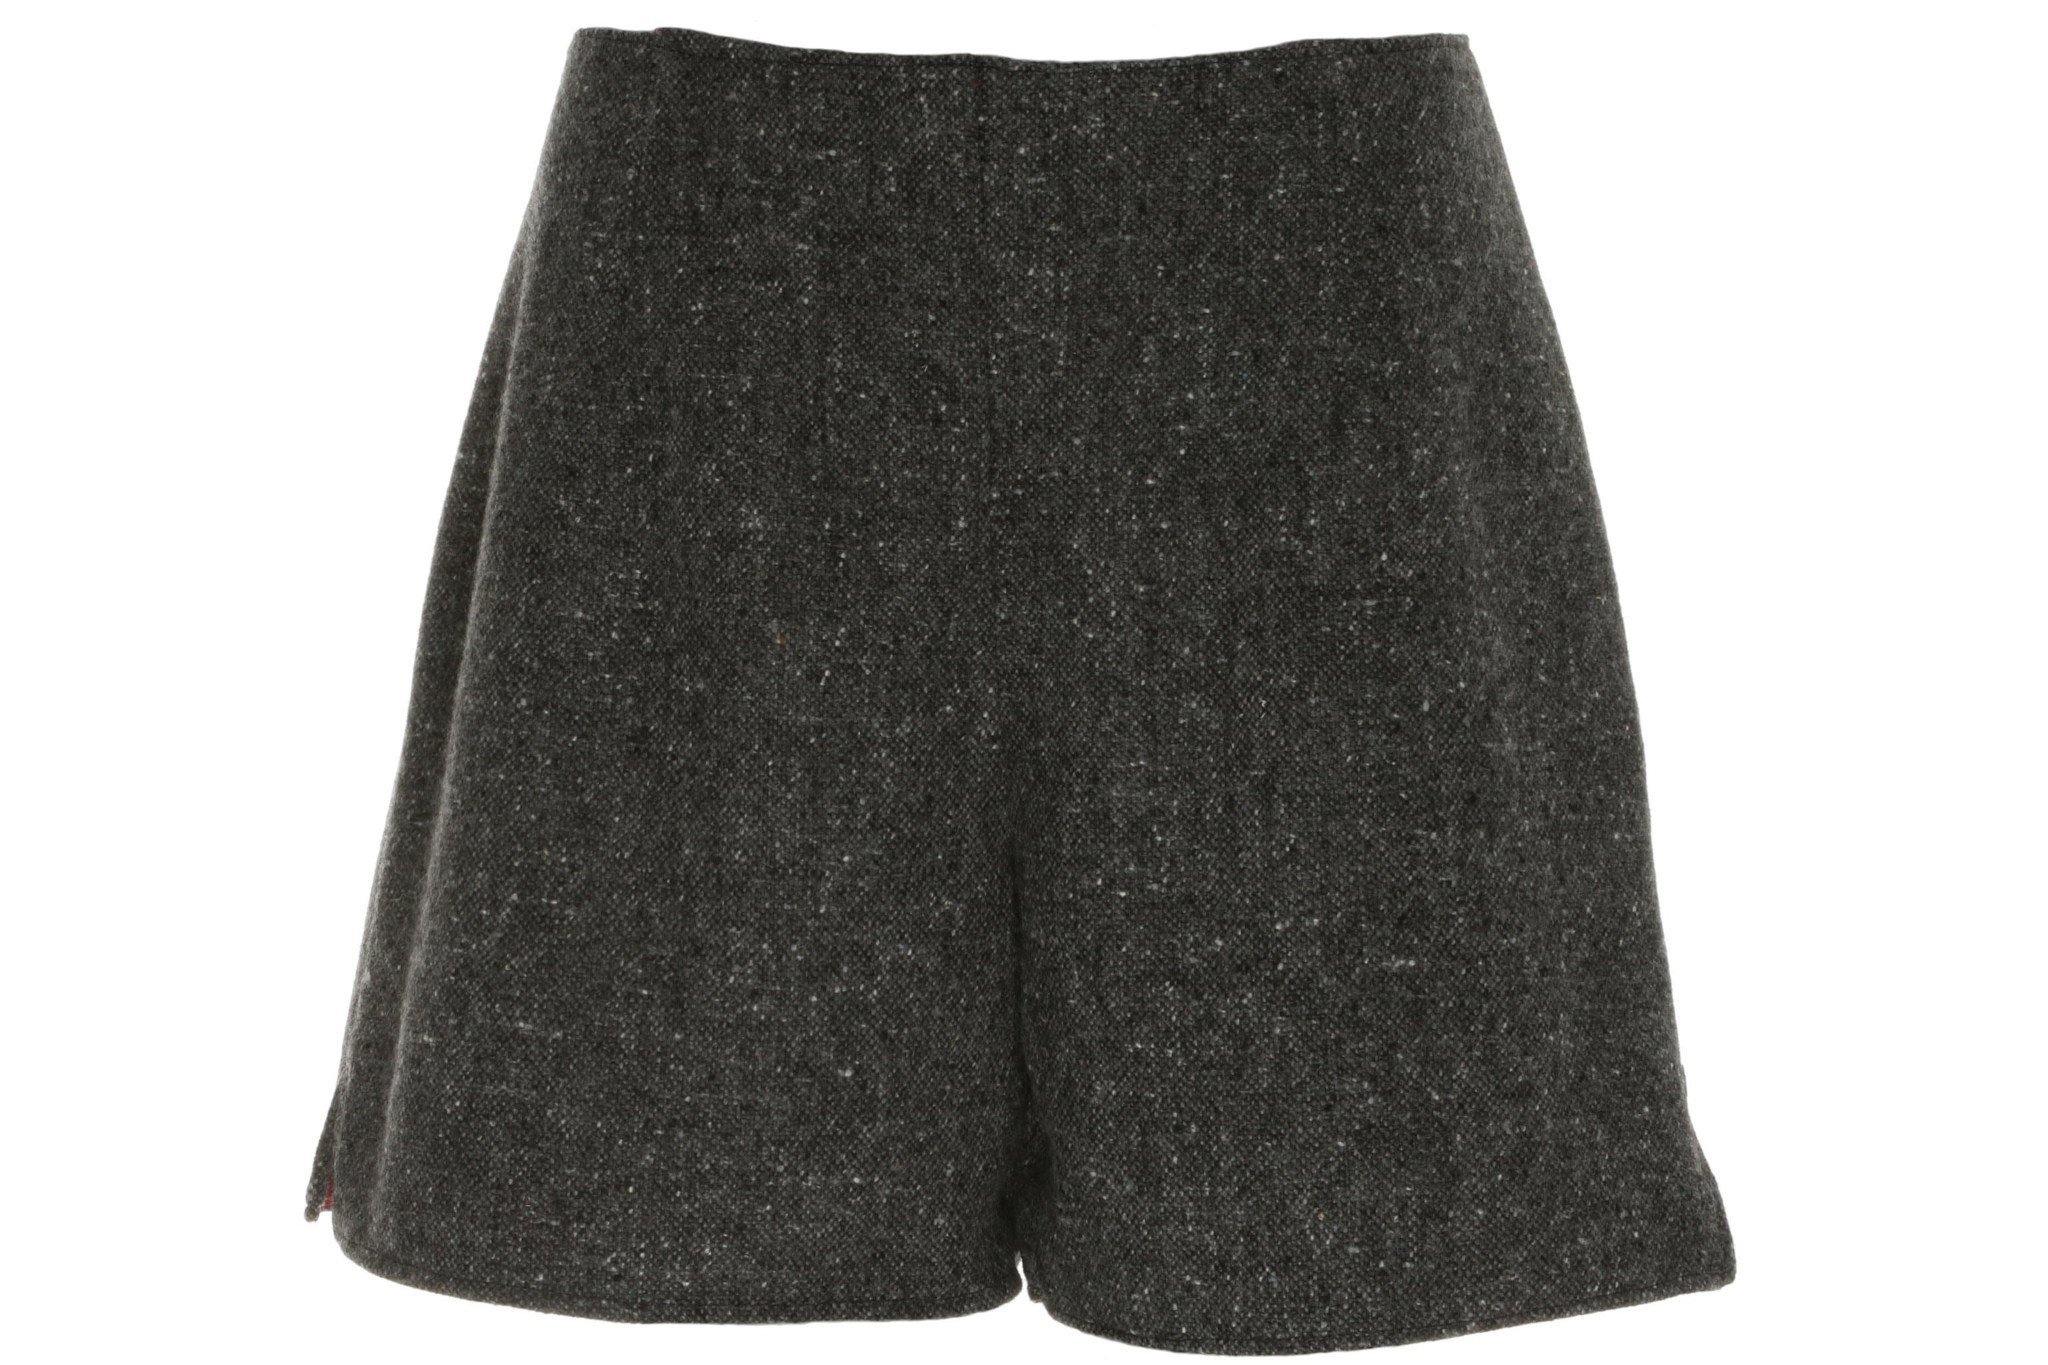 Donegal Tweed Shorts - Charcoal - Tweed.ie